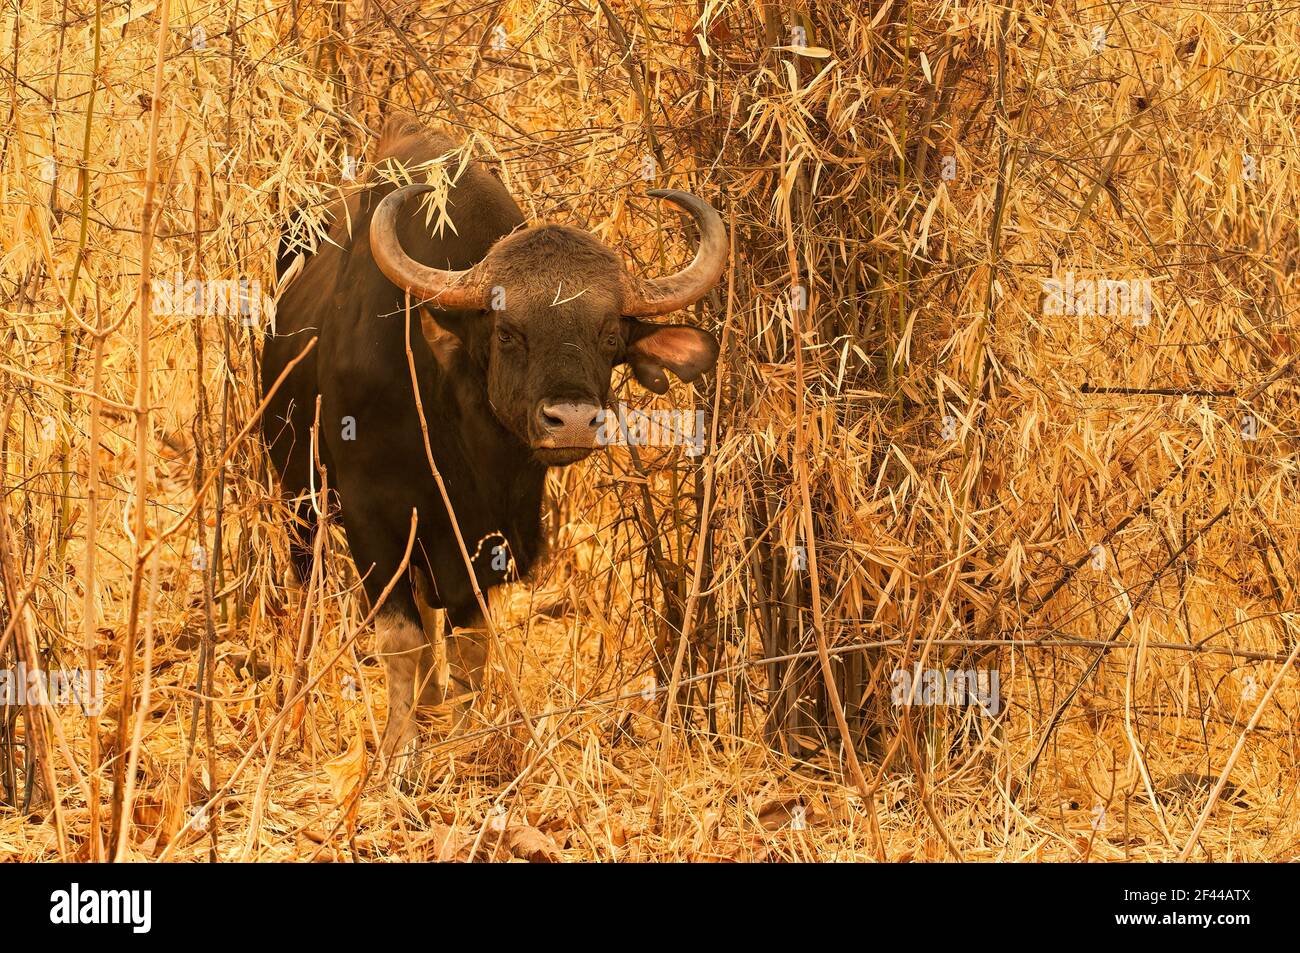 Indian Gaur, Indian Bison, Bos gaurus, emergente dalla foresta di bambù secco, Parco Nazionale di Bandipur, santuario della fauna selvatica, Karnataka, India, Asia Foto Stock